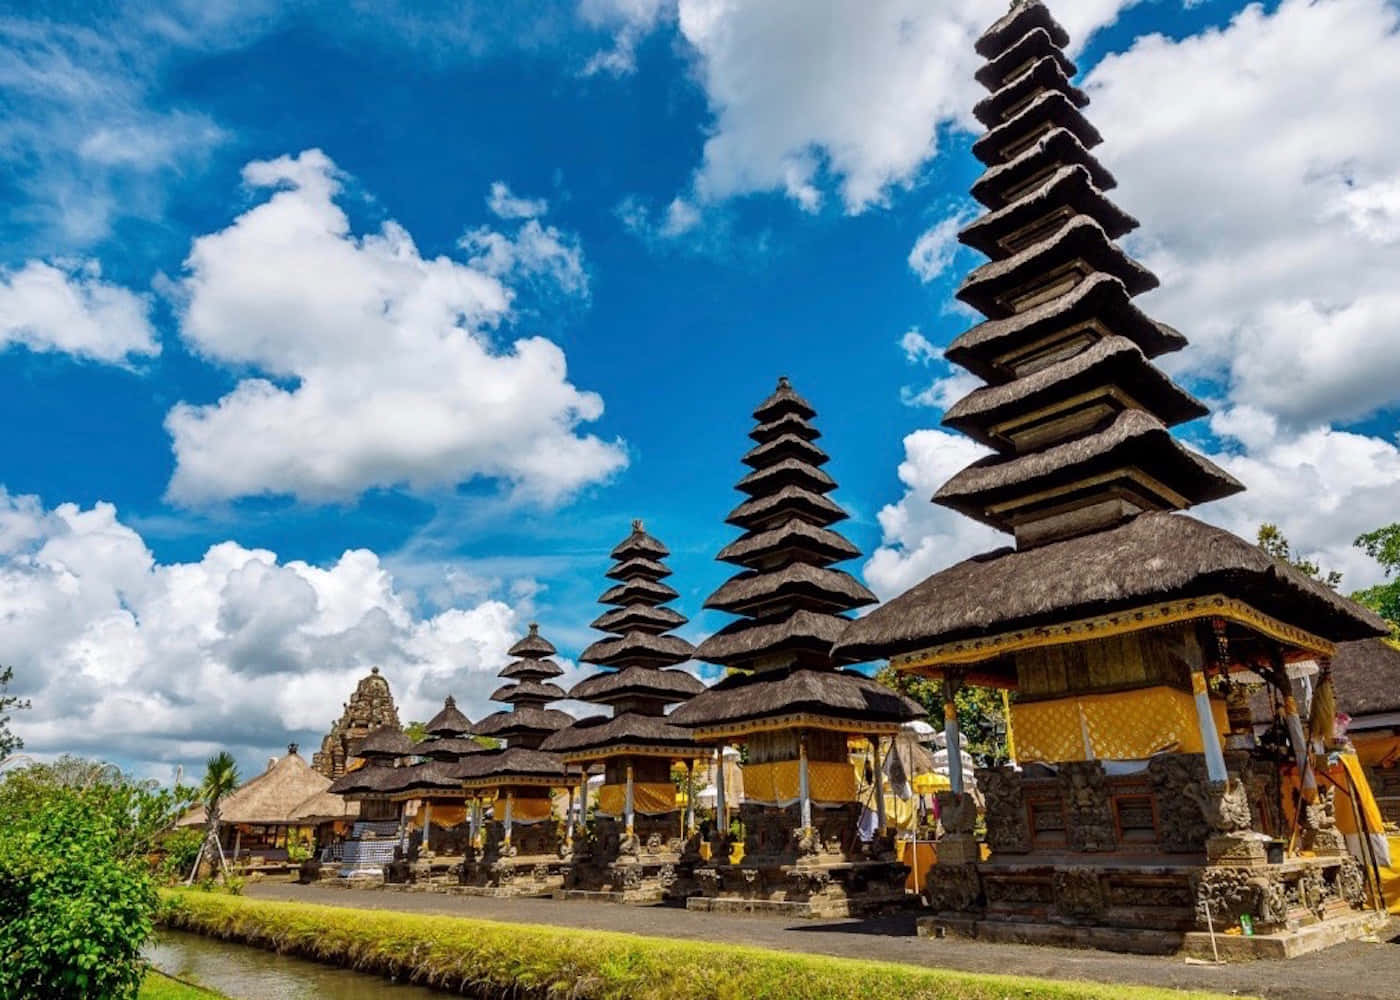 Beautiful views to explore in Bali